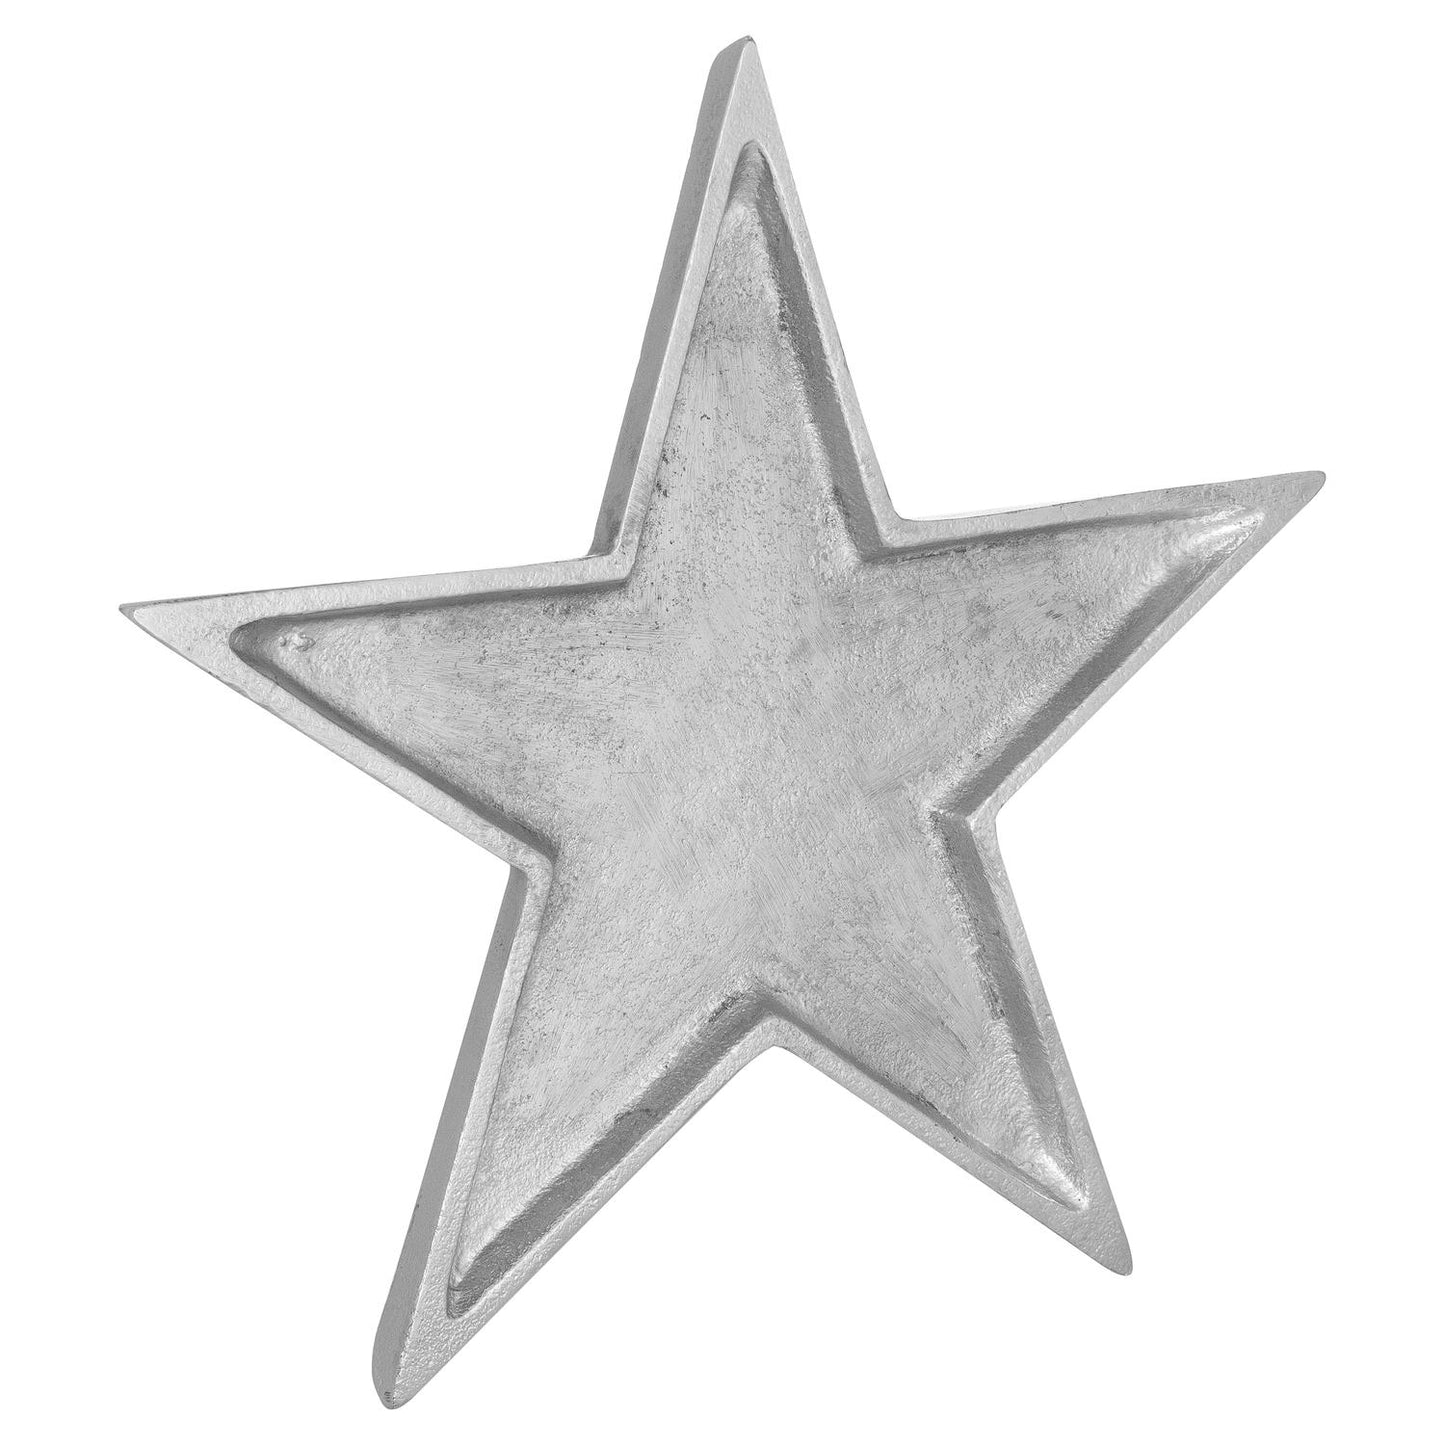 Cast Aluminium Star Dish